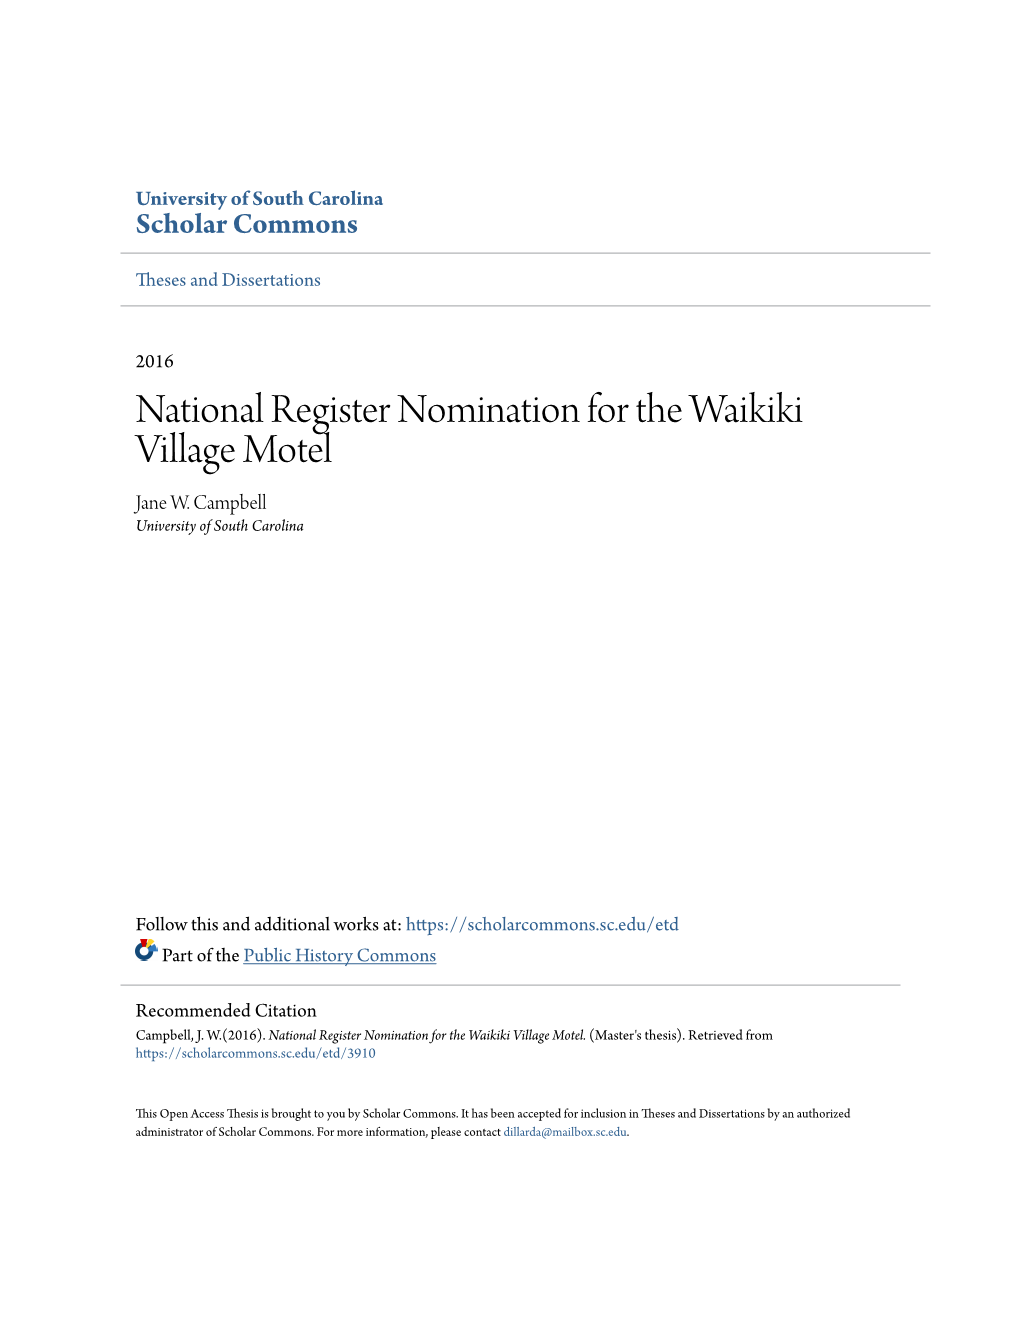 National Register Nomination for the Waikiki Village Motel Jane W